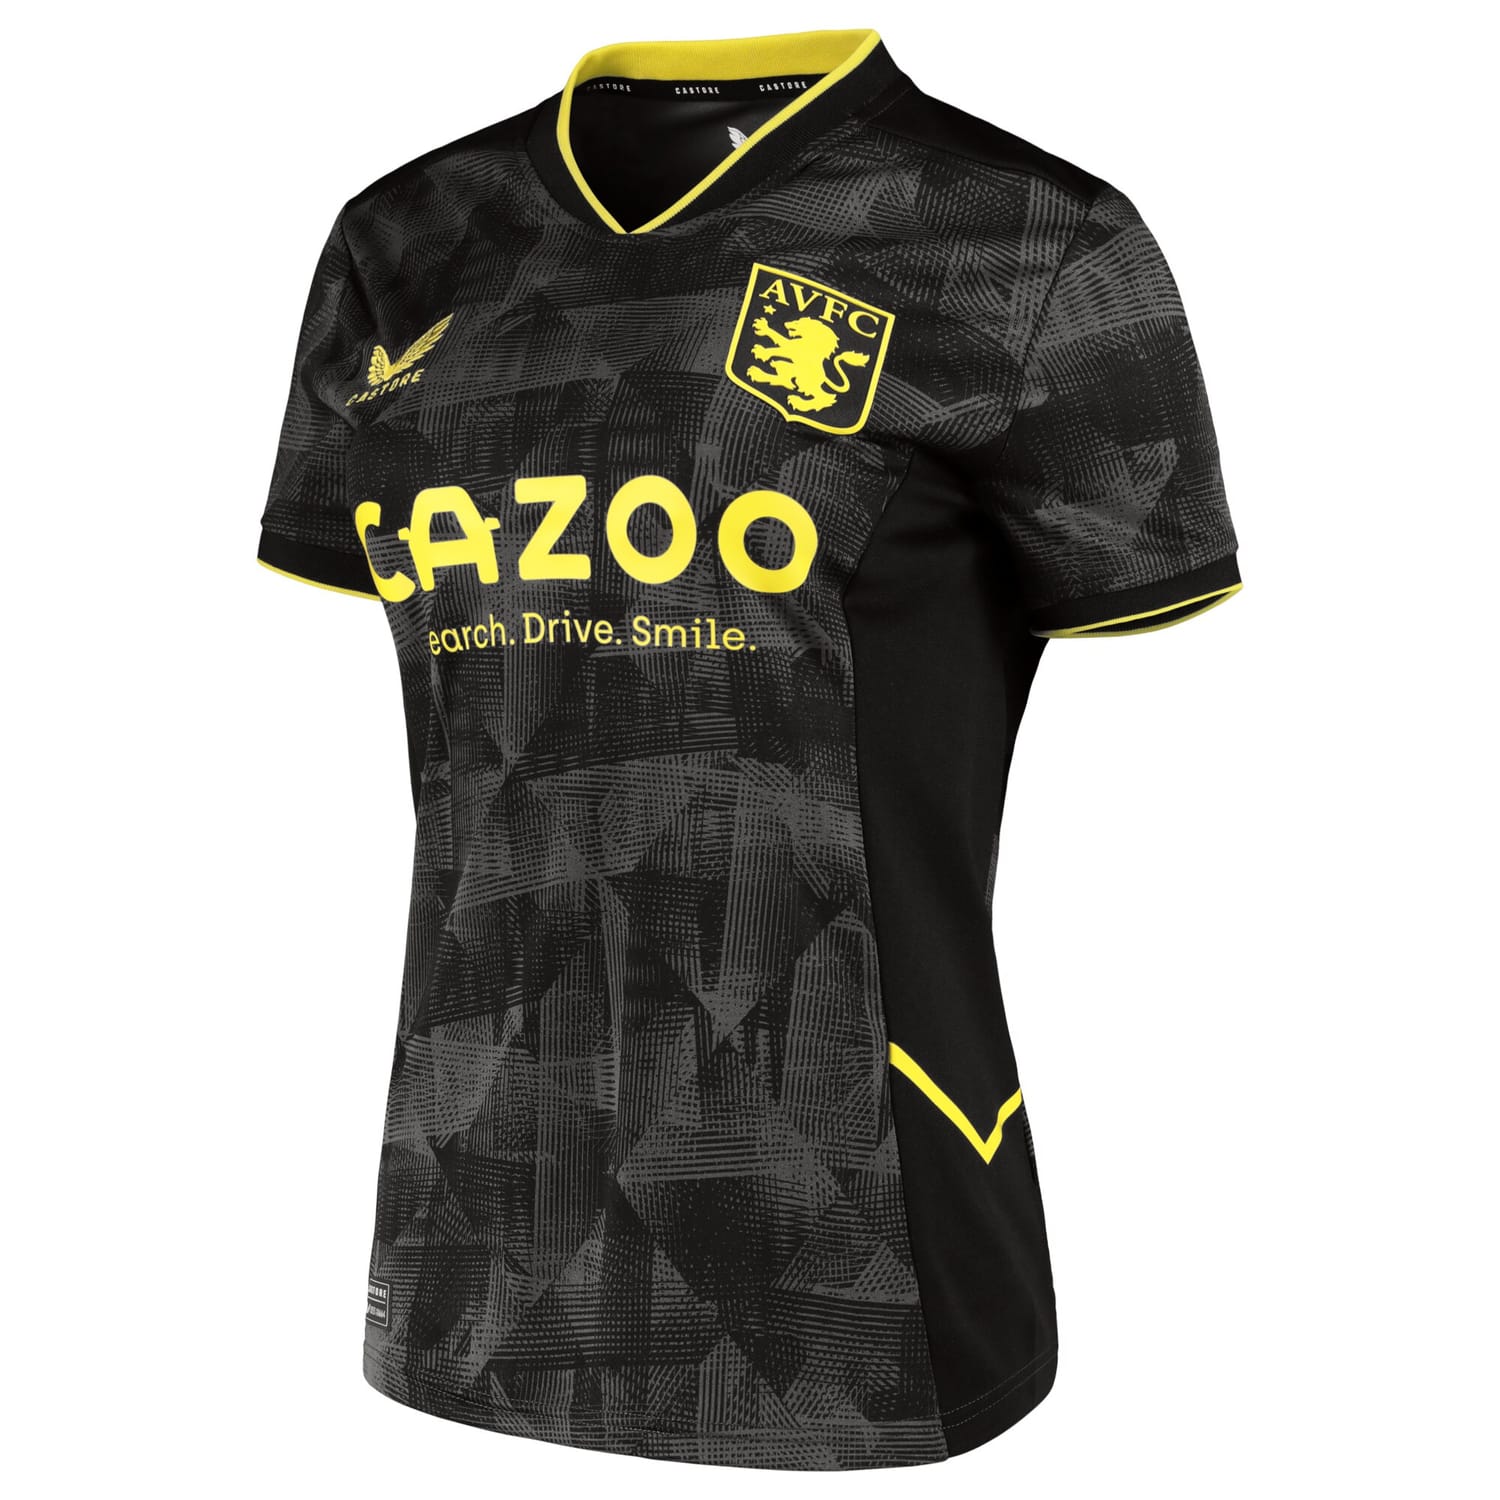 Premier League Ast. Villa Third Jersey Shirt 2022-23 player Emi Buendía 10 printing for Women